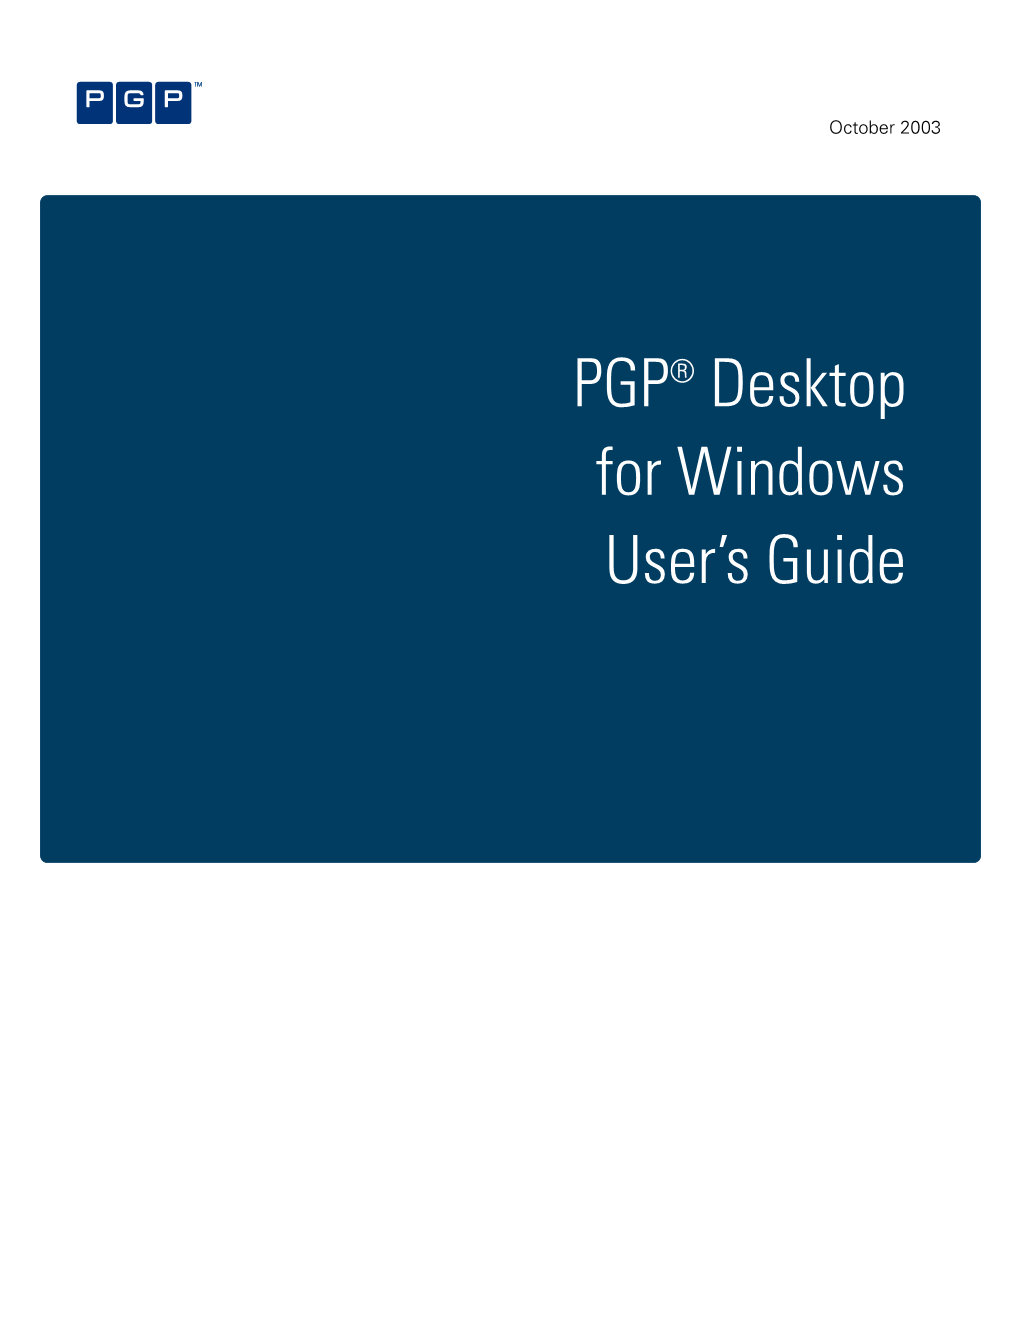 PGP® Desktop for Windows User's Guide